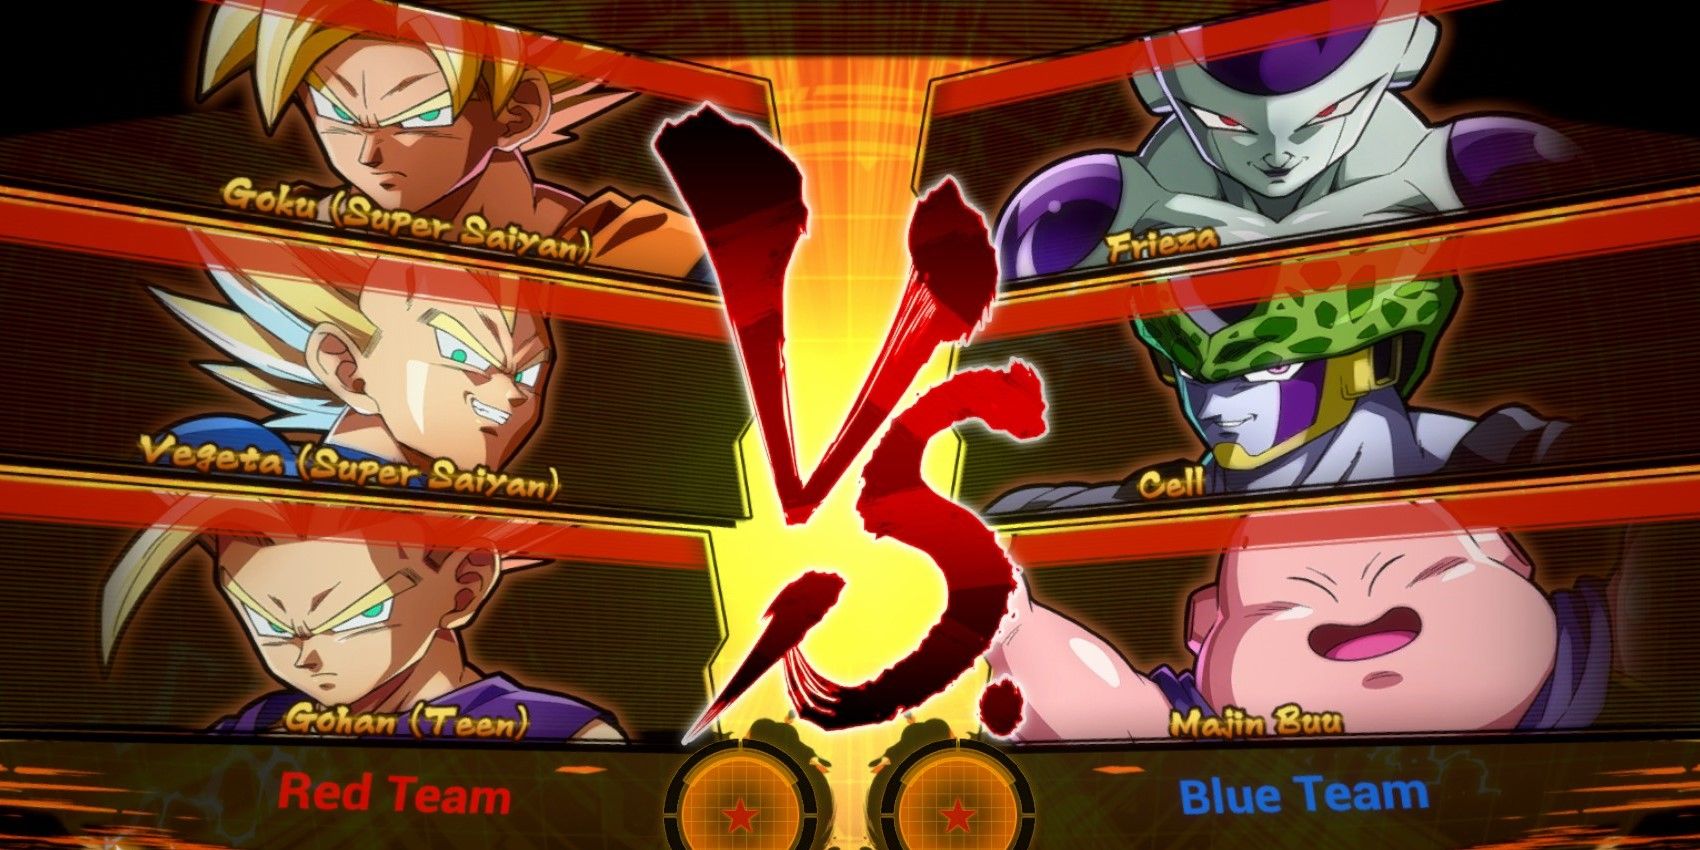 DBFZ Goku, Vegeta, and Gohan vs. Frieza, Cell, and Majin Buu